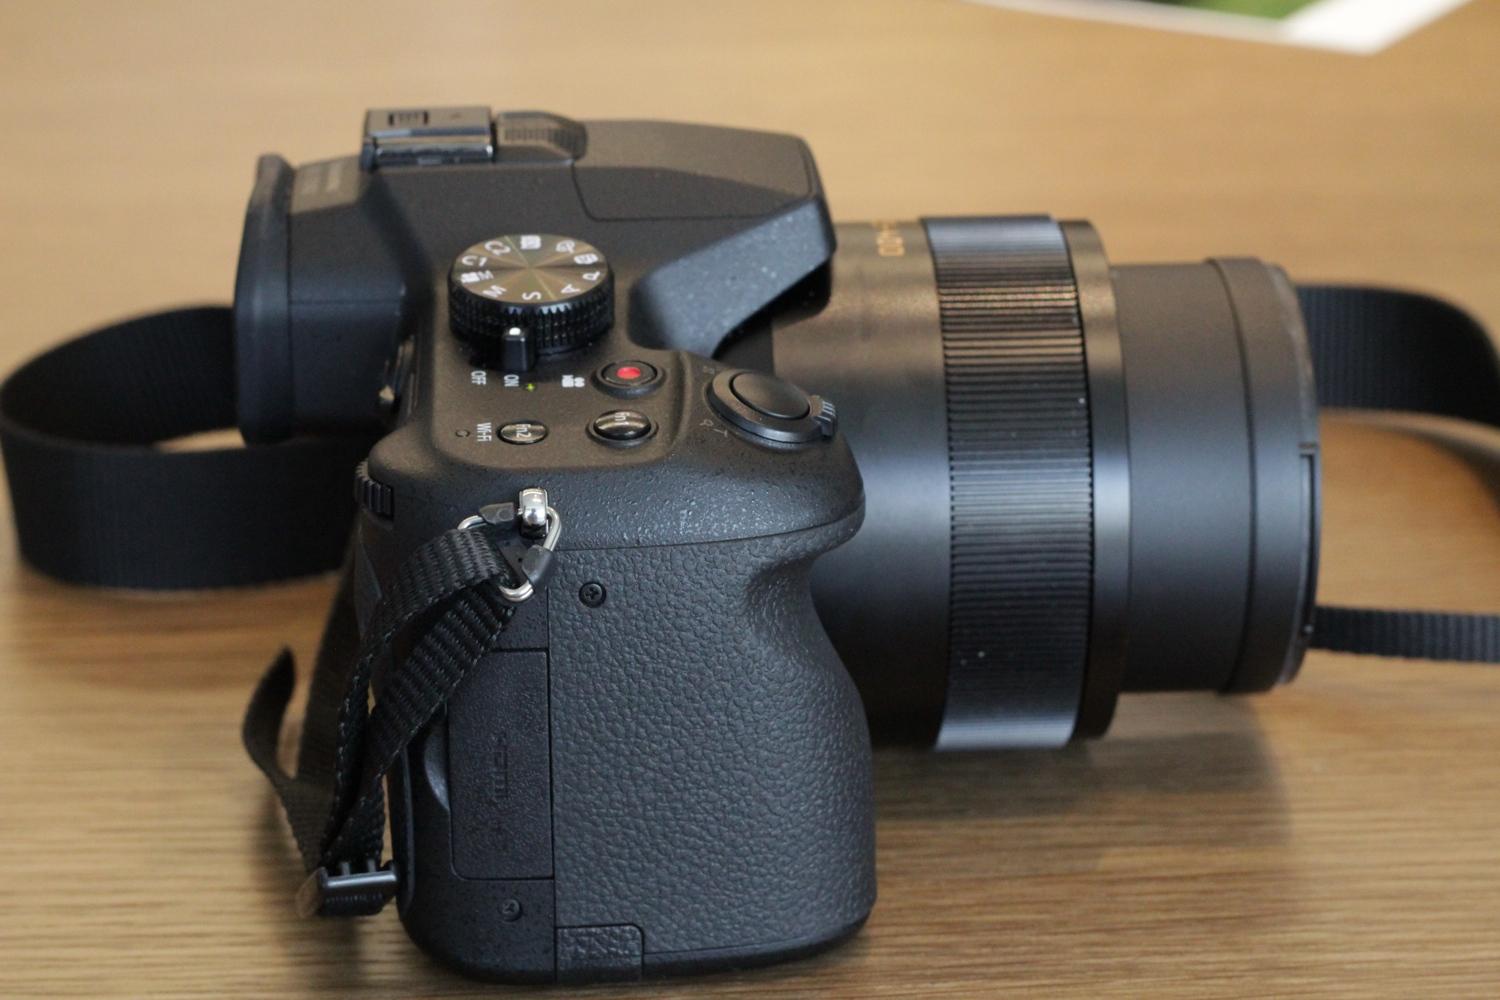 panasonic introduces 4k capable lumix fz1000 bridge camera img 1314